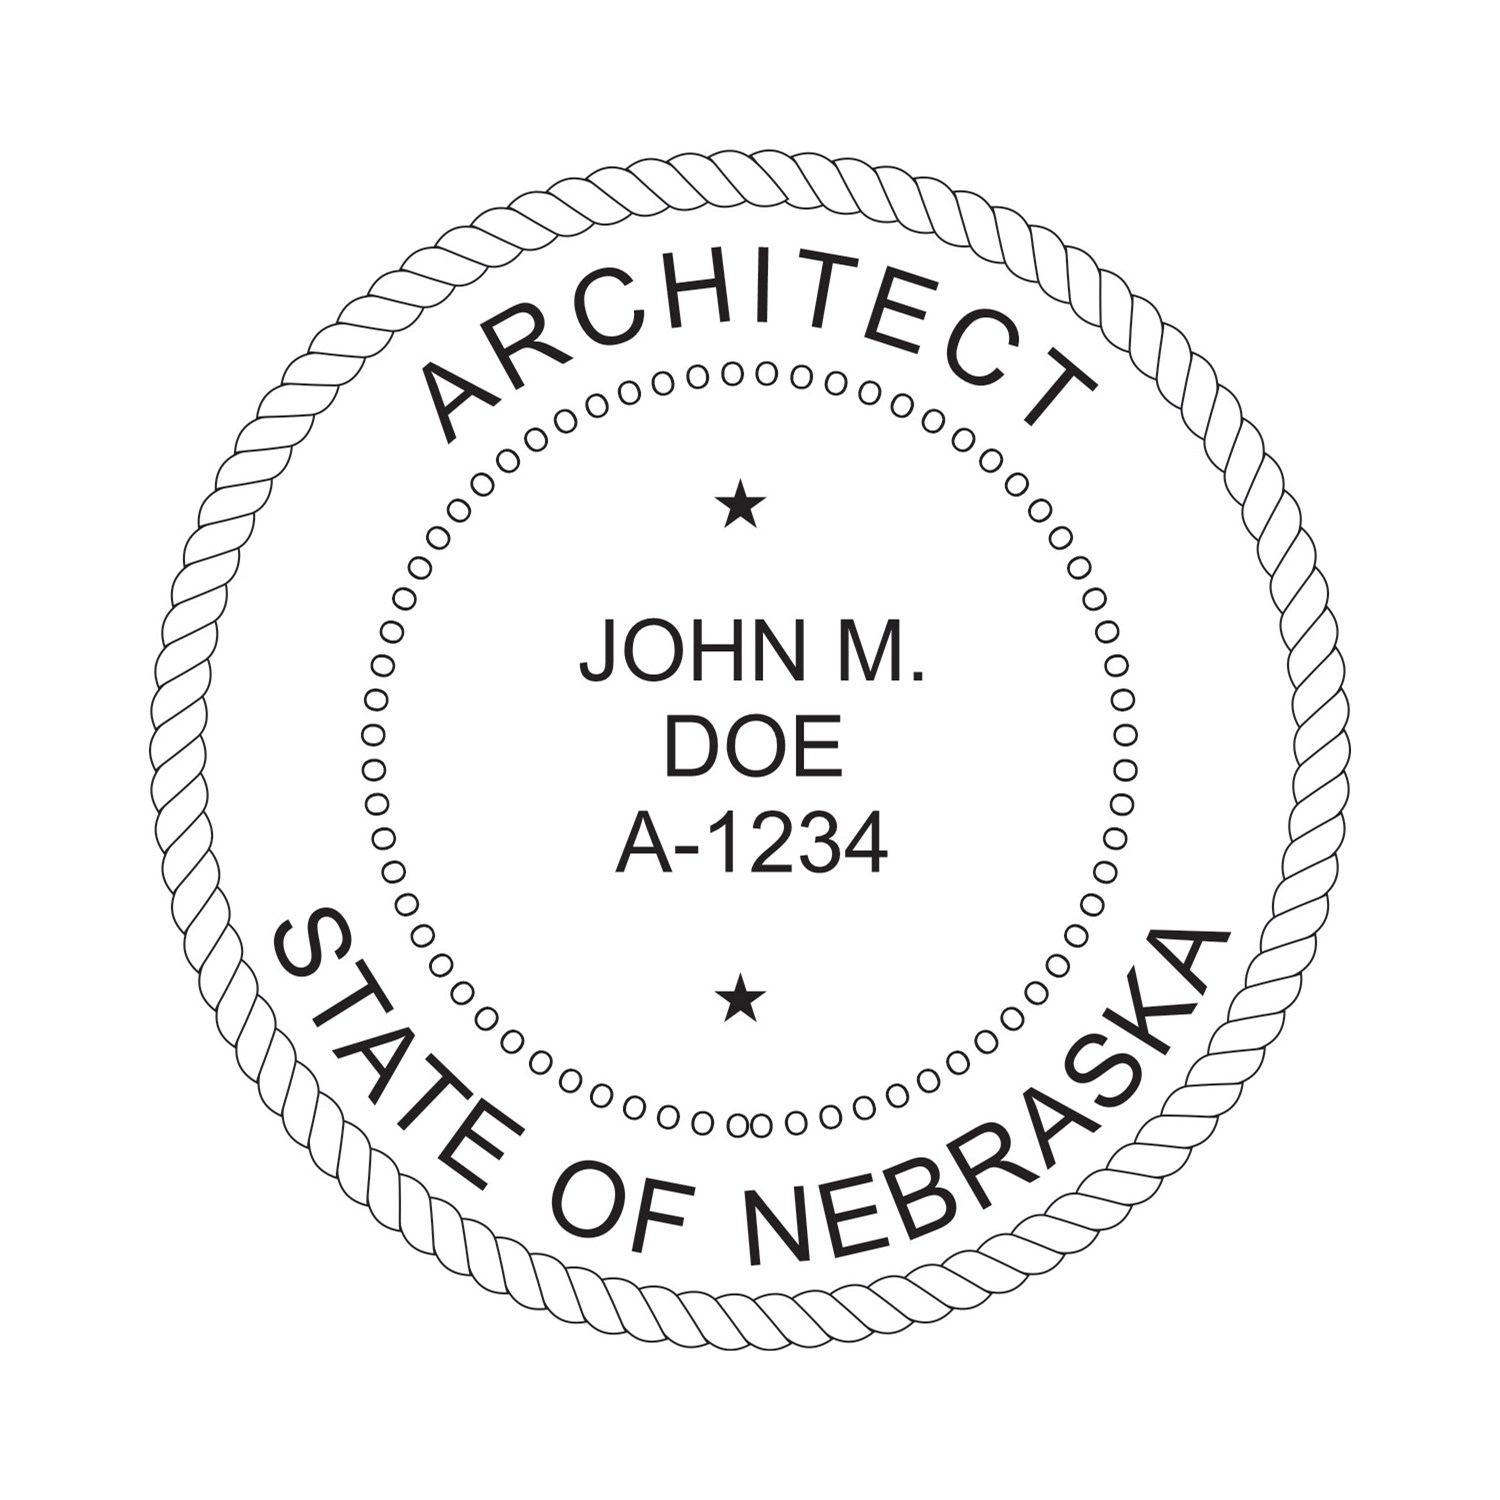 Architect Seal - Pocket Style - Nebraska